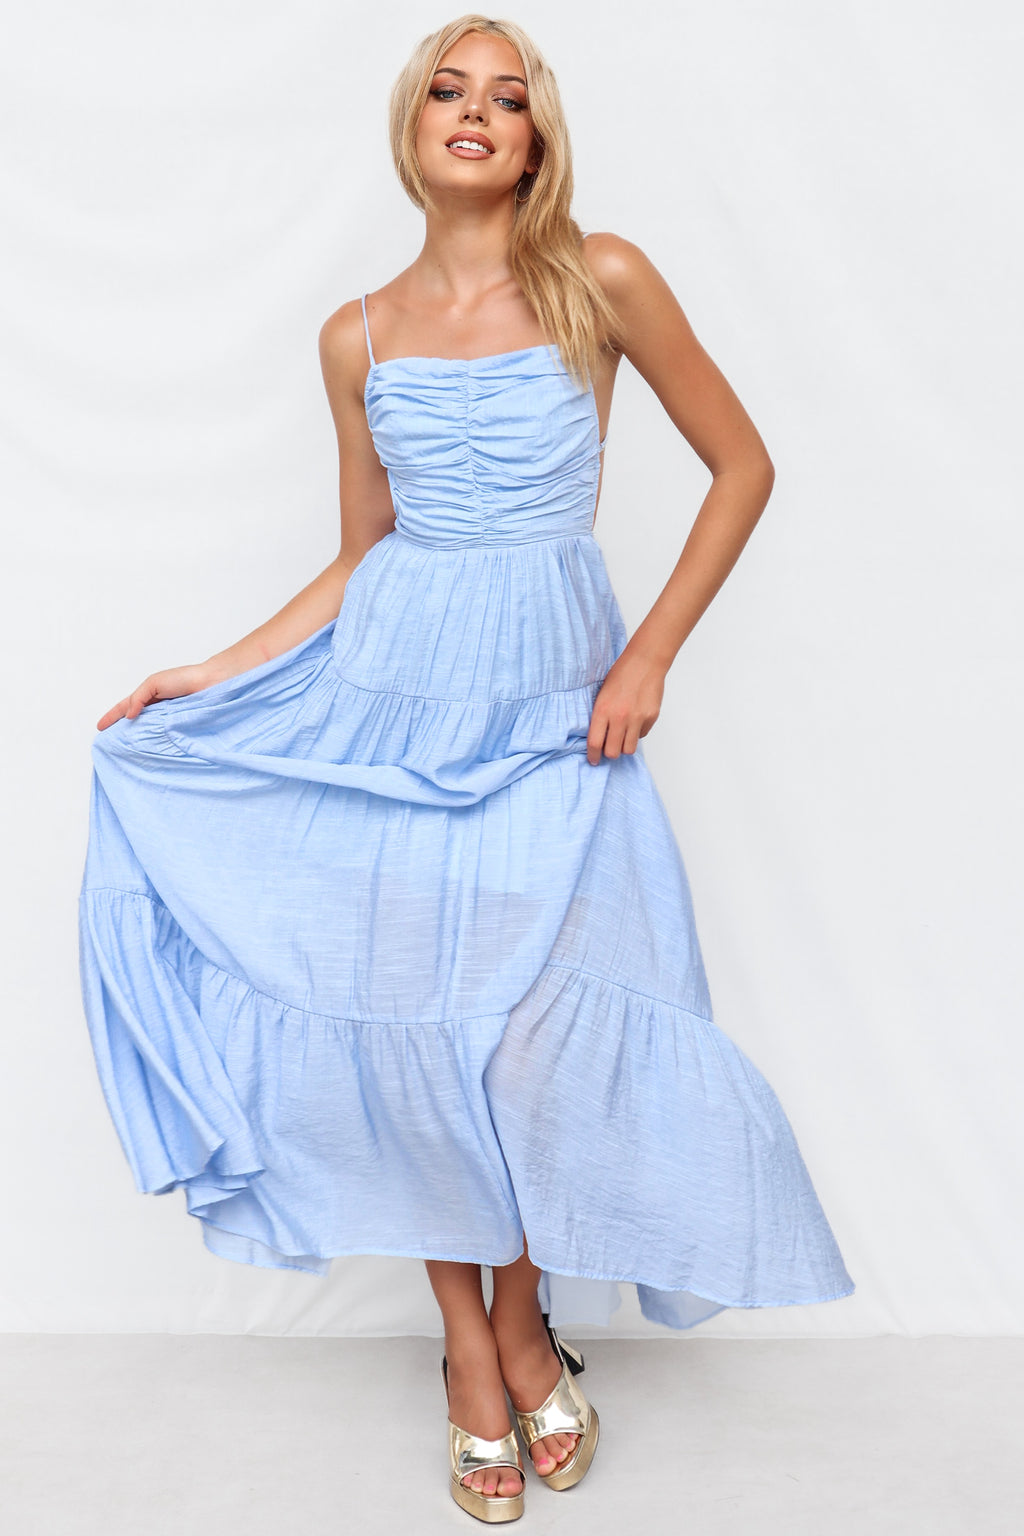 Runway Goddess Dresses | Party Dress, Semi Formal Dress, Evening Gown